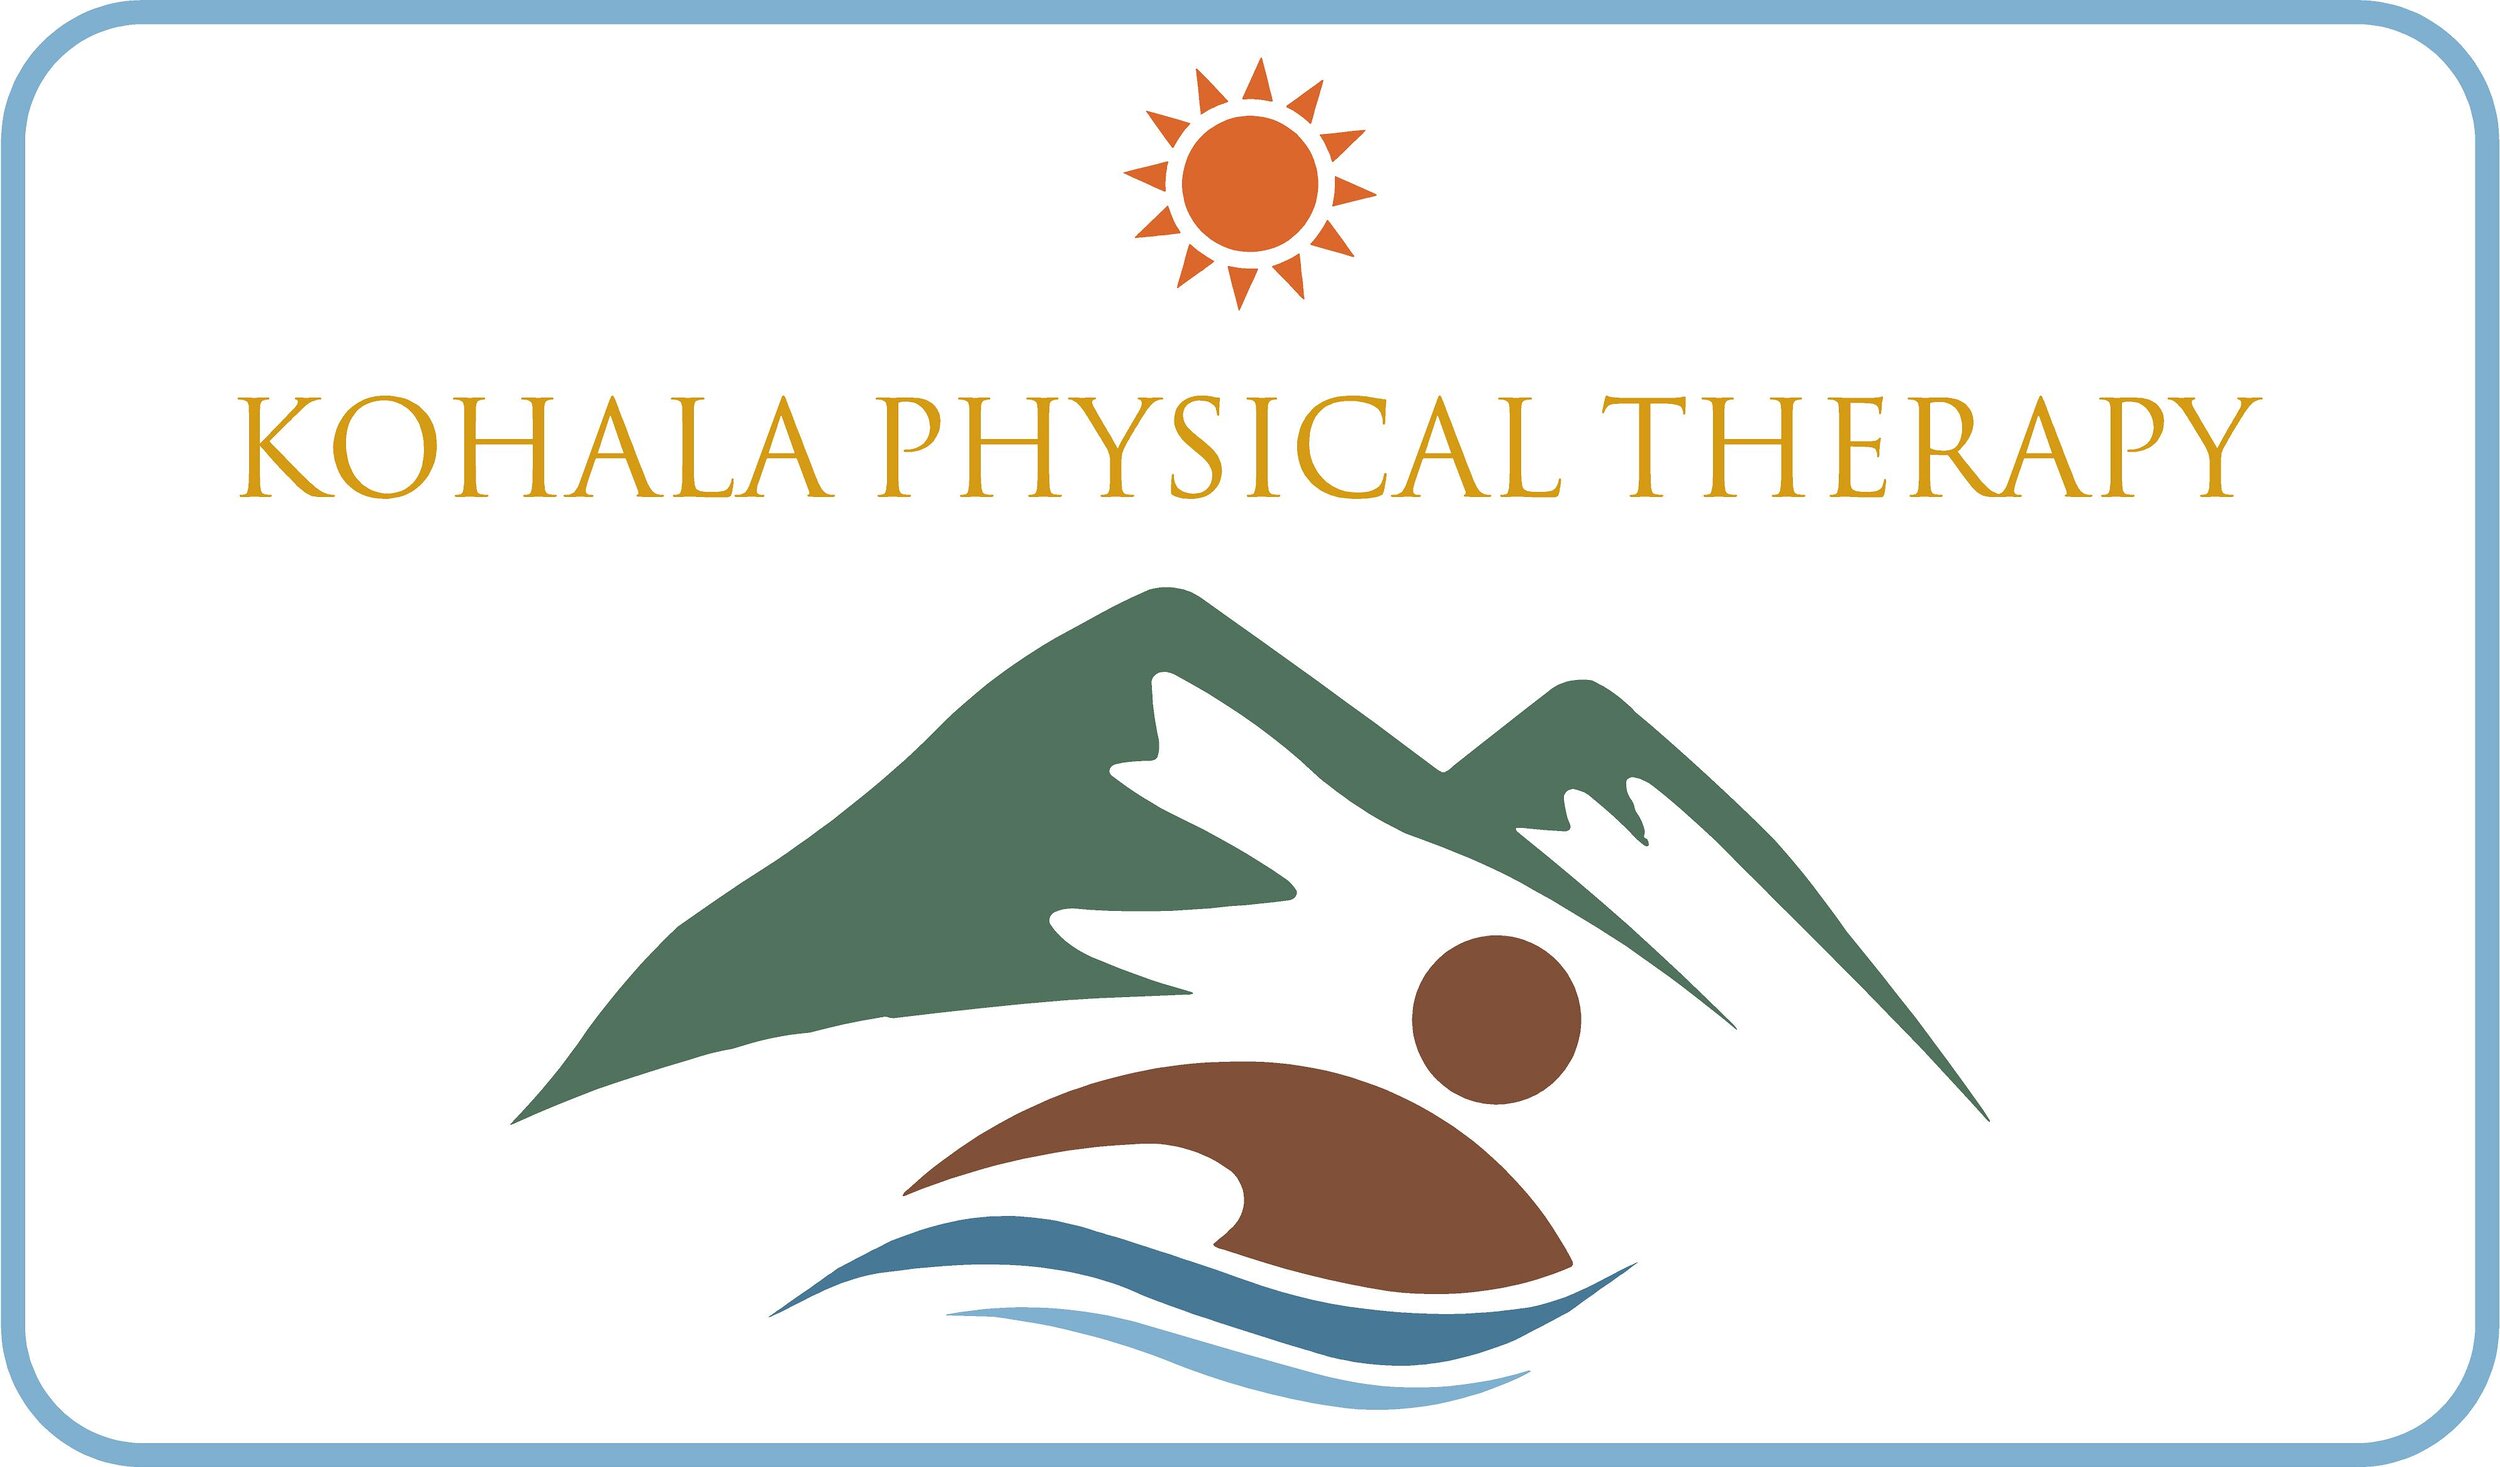 Kohala Physical Therapy